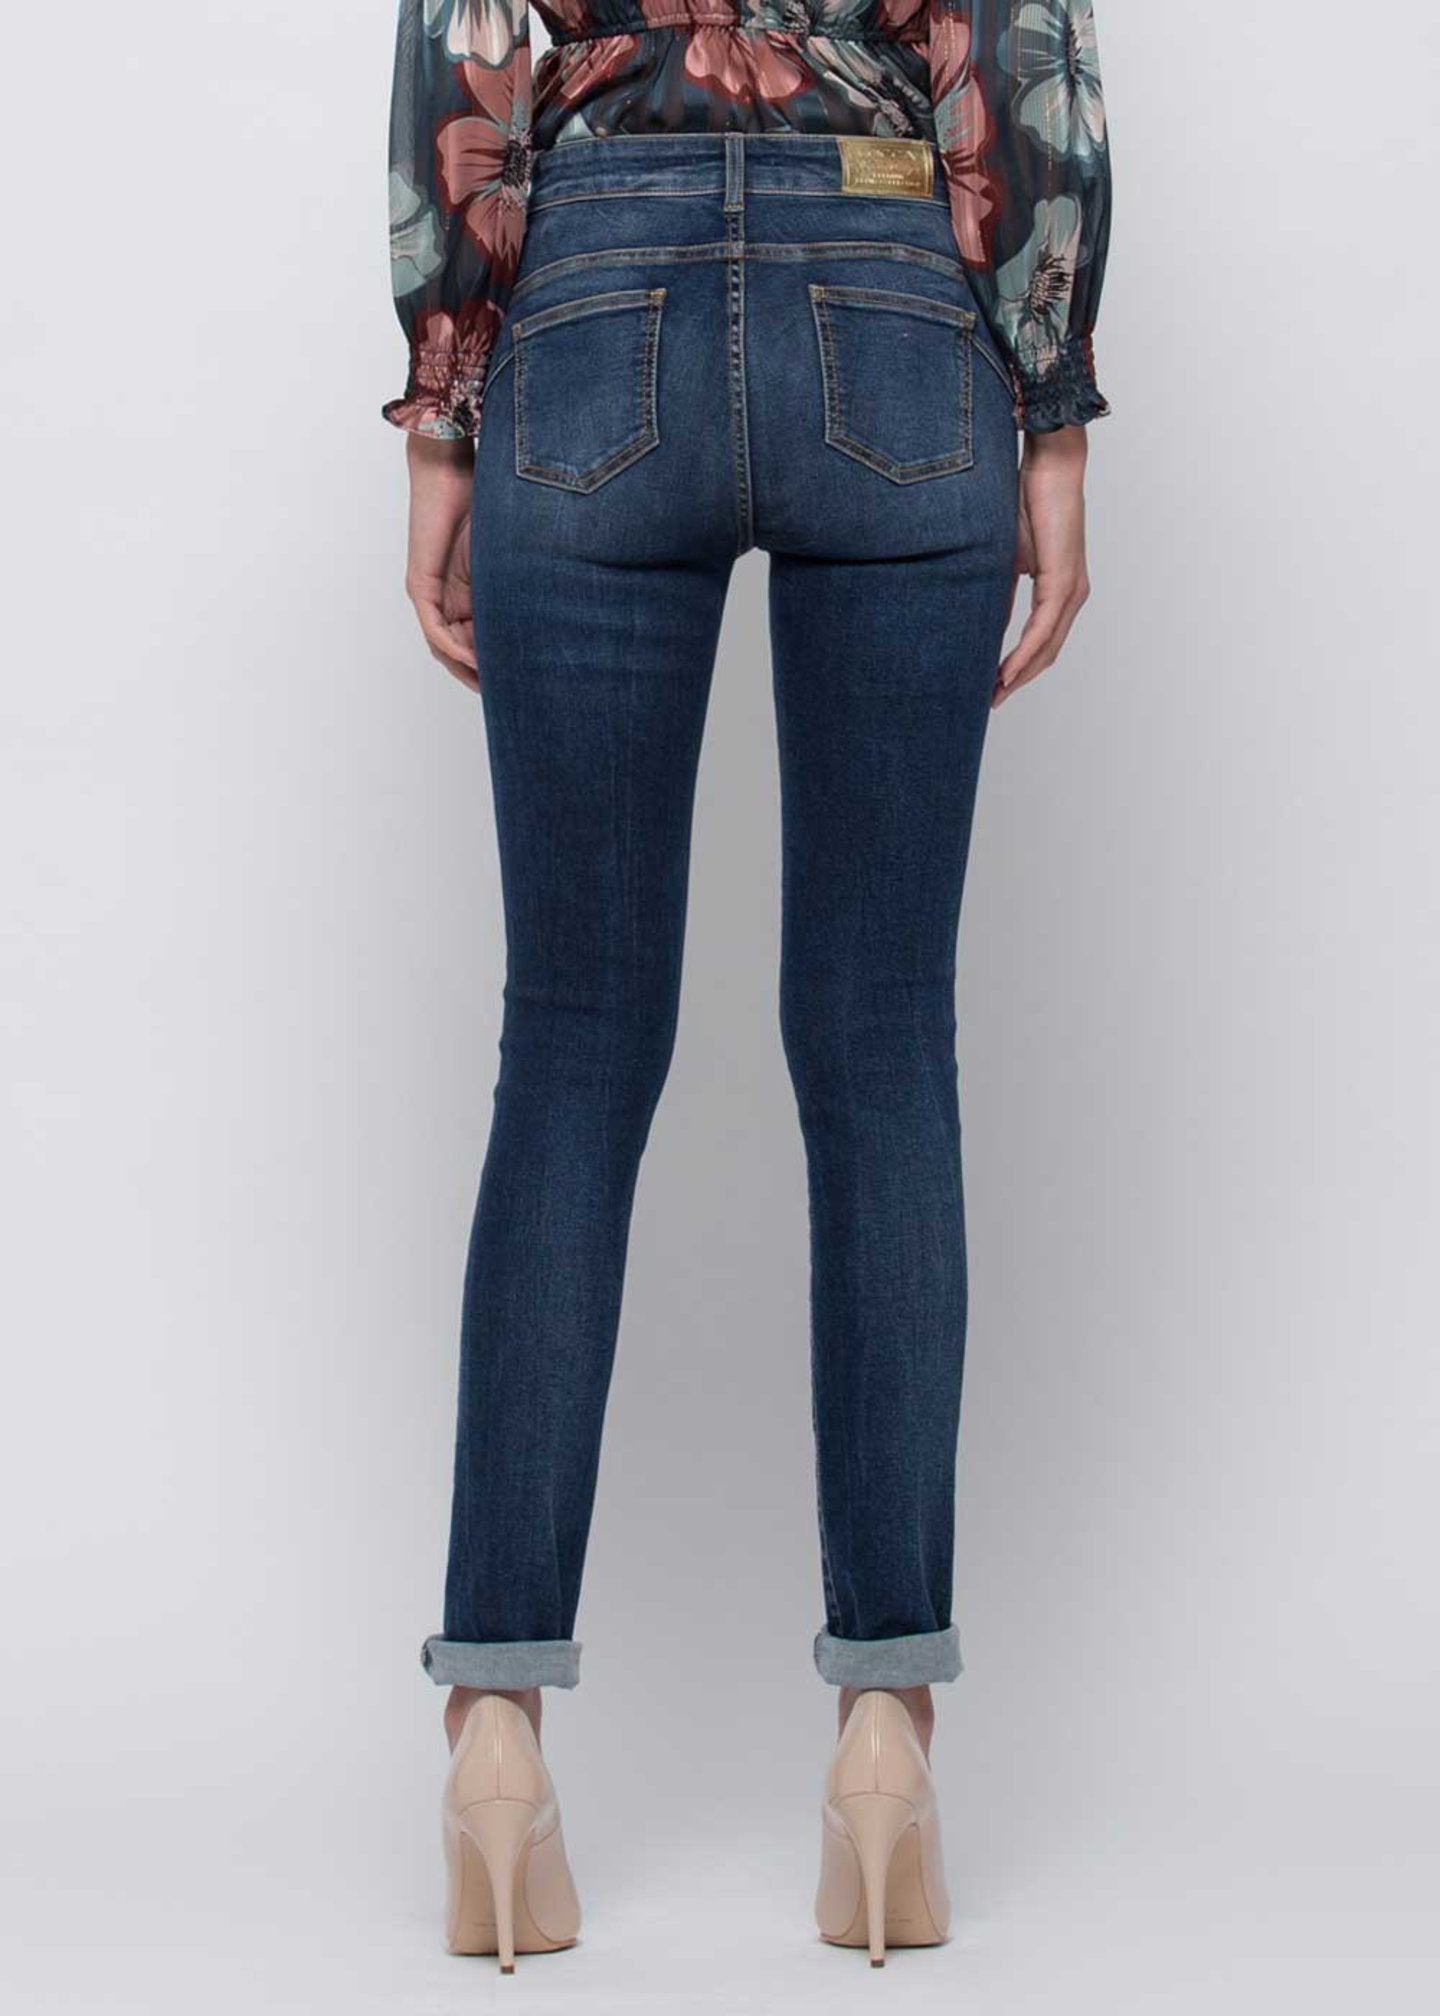 Jeans Kocca Modello Skinny / Jeans - Ideal Moda